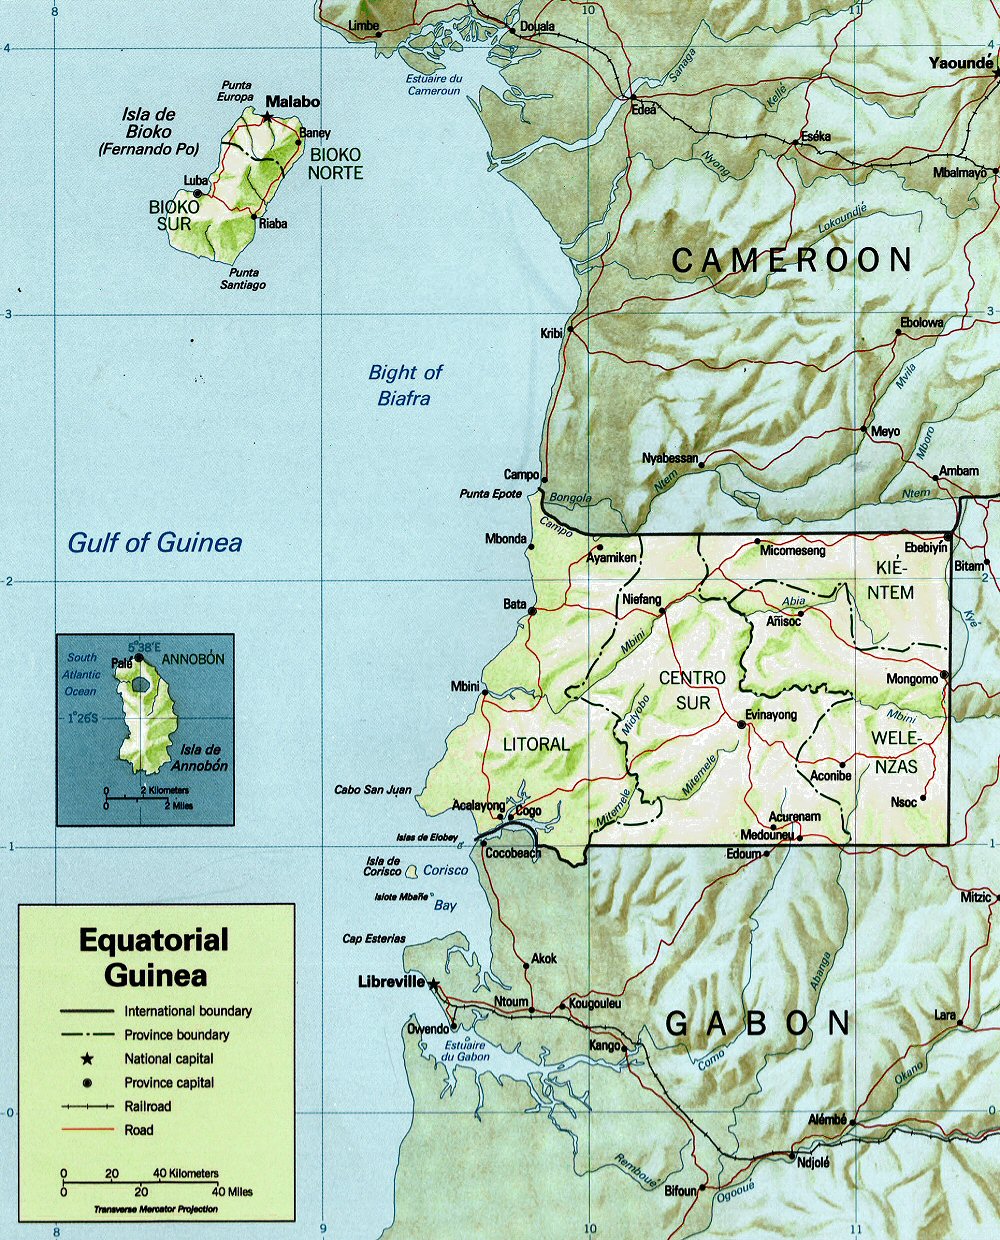 Carte topographique de la Guine Equatoriale.